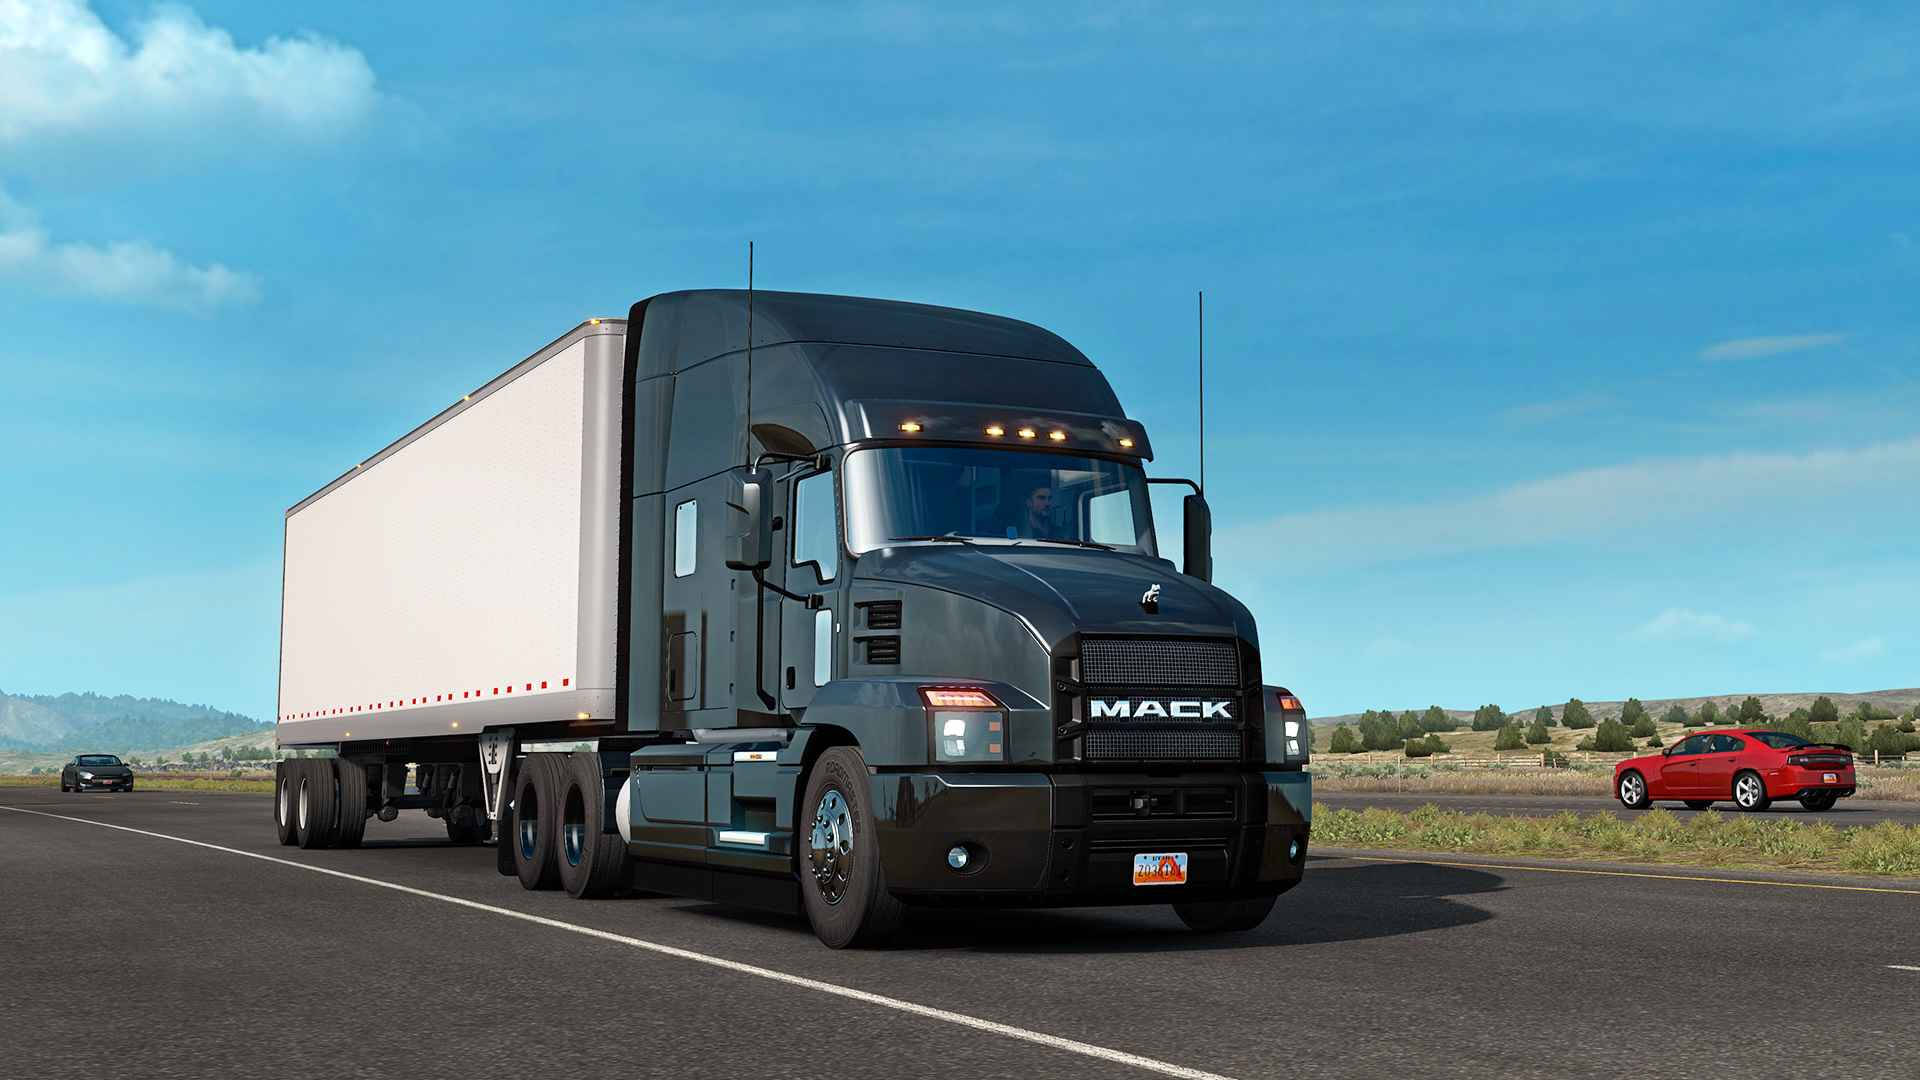 American Truck Simulator Mack Anthem Truck Background